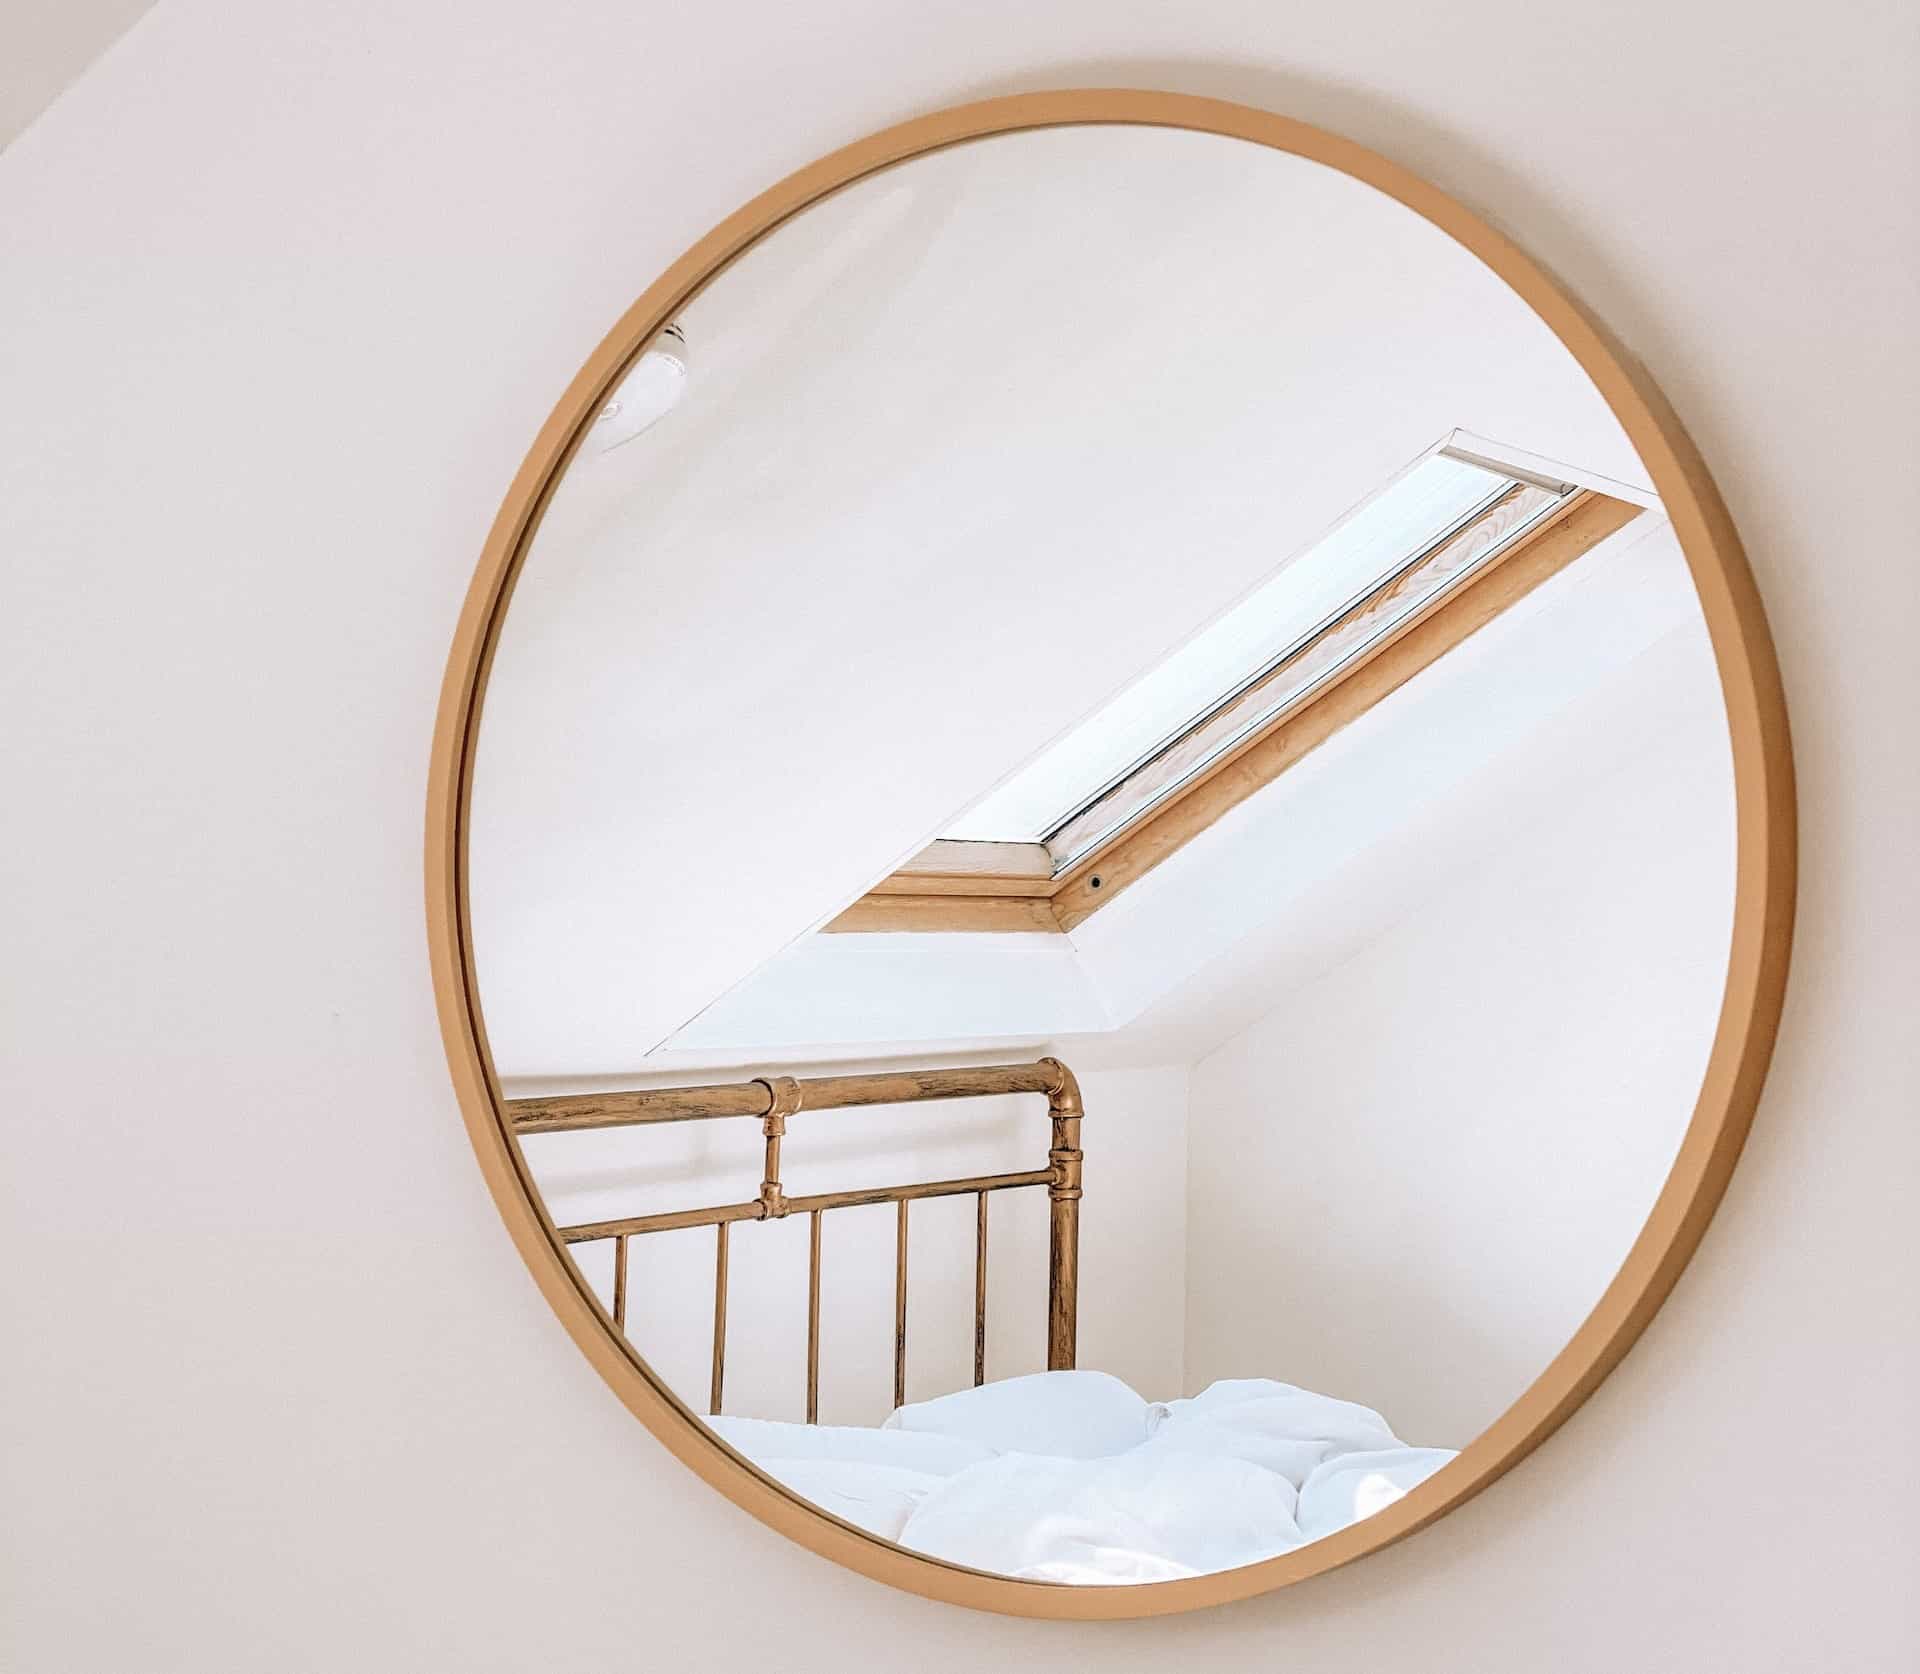 How to arrange the mirror in the bedroom?